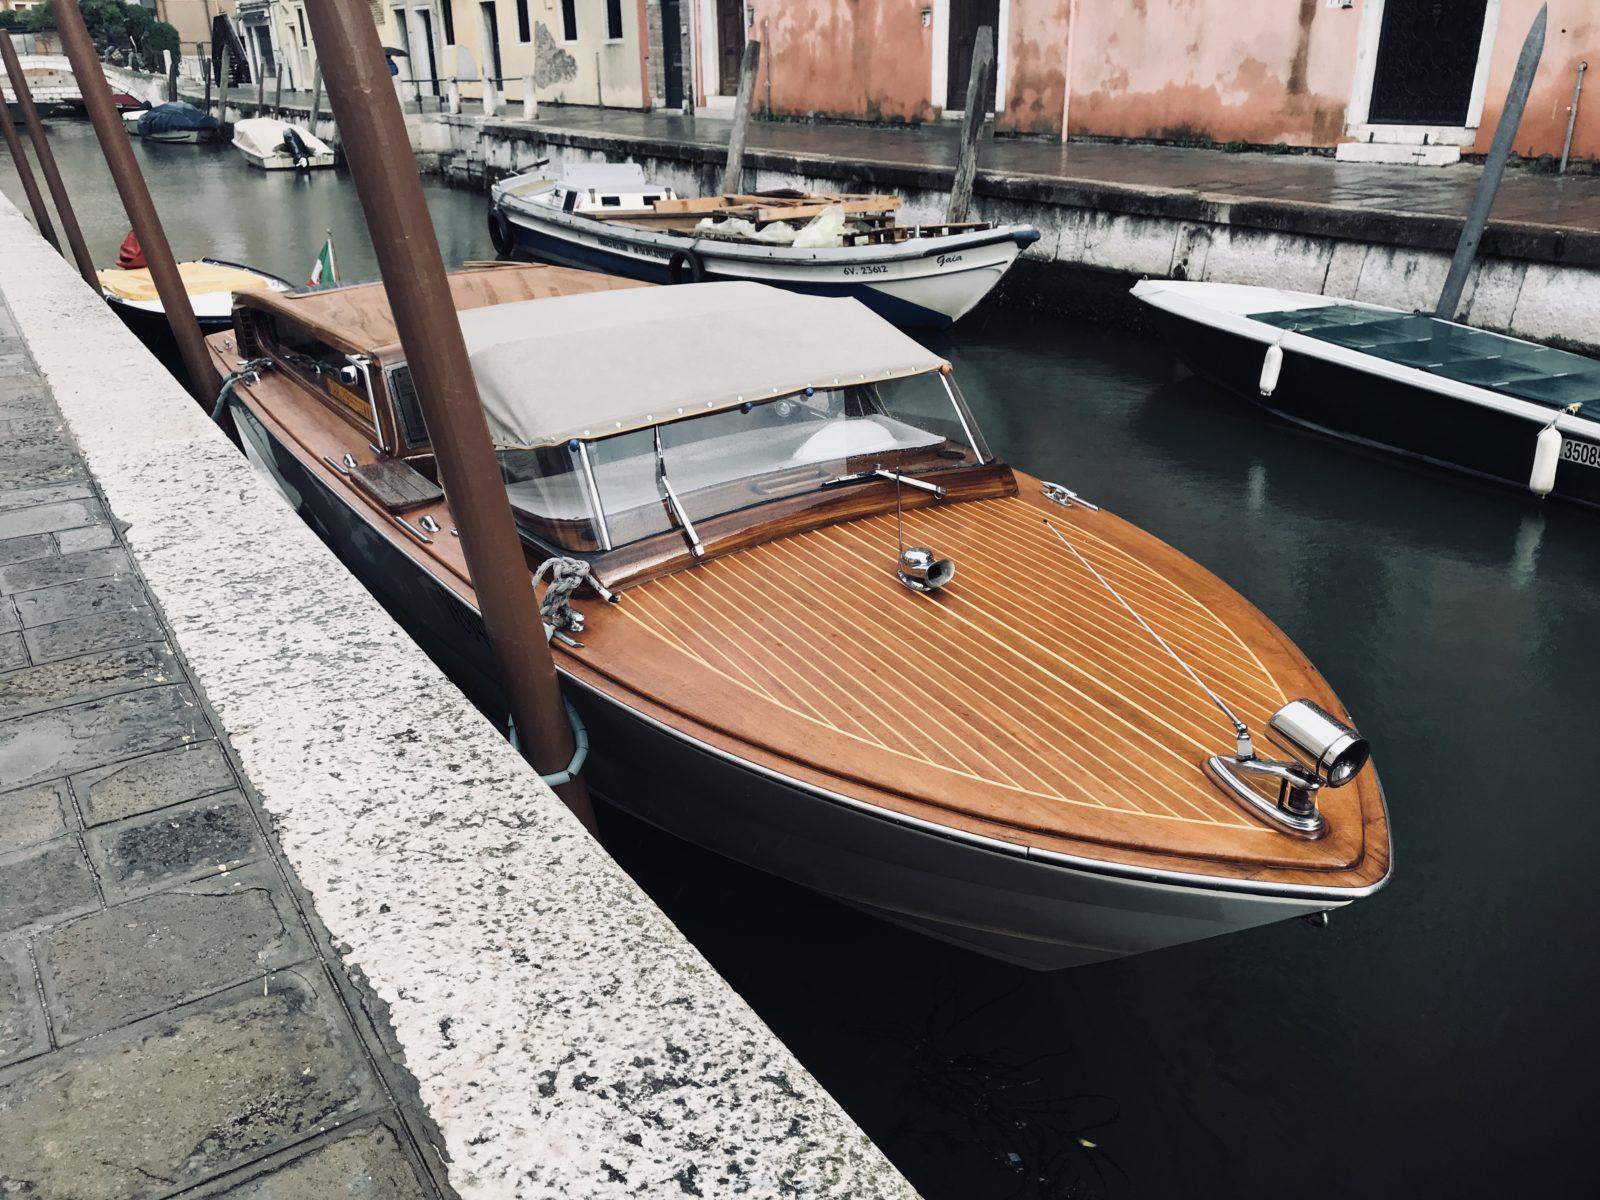 Indtryk fra Venezia …